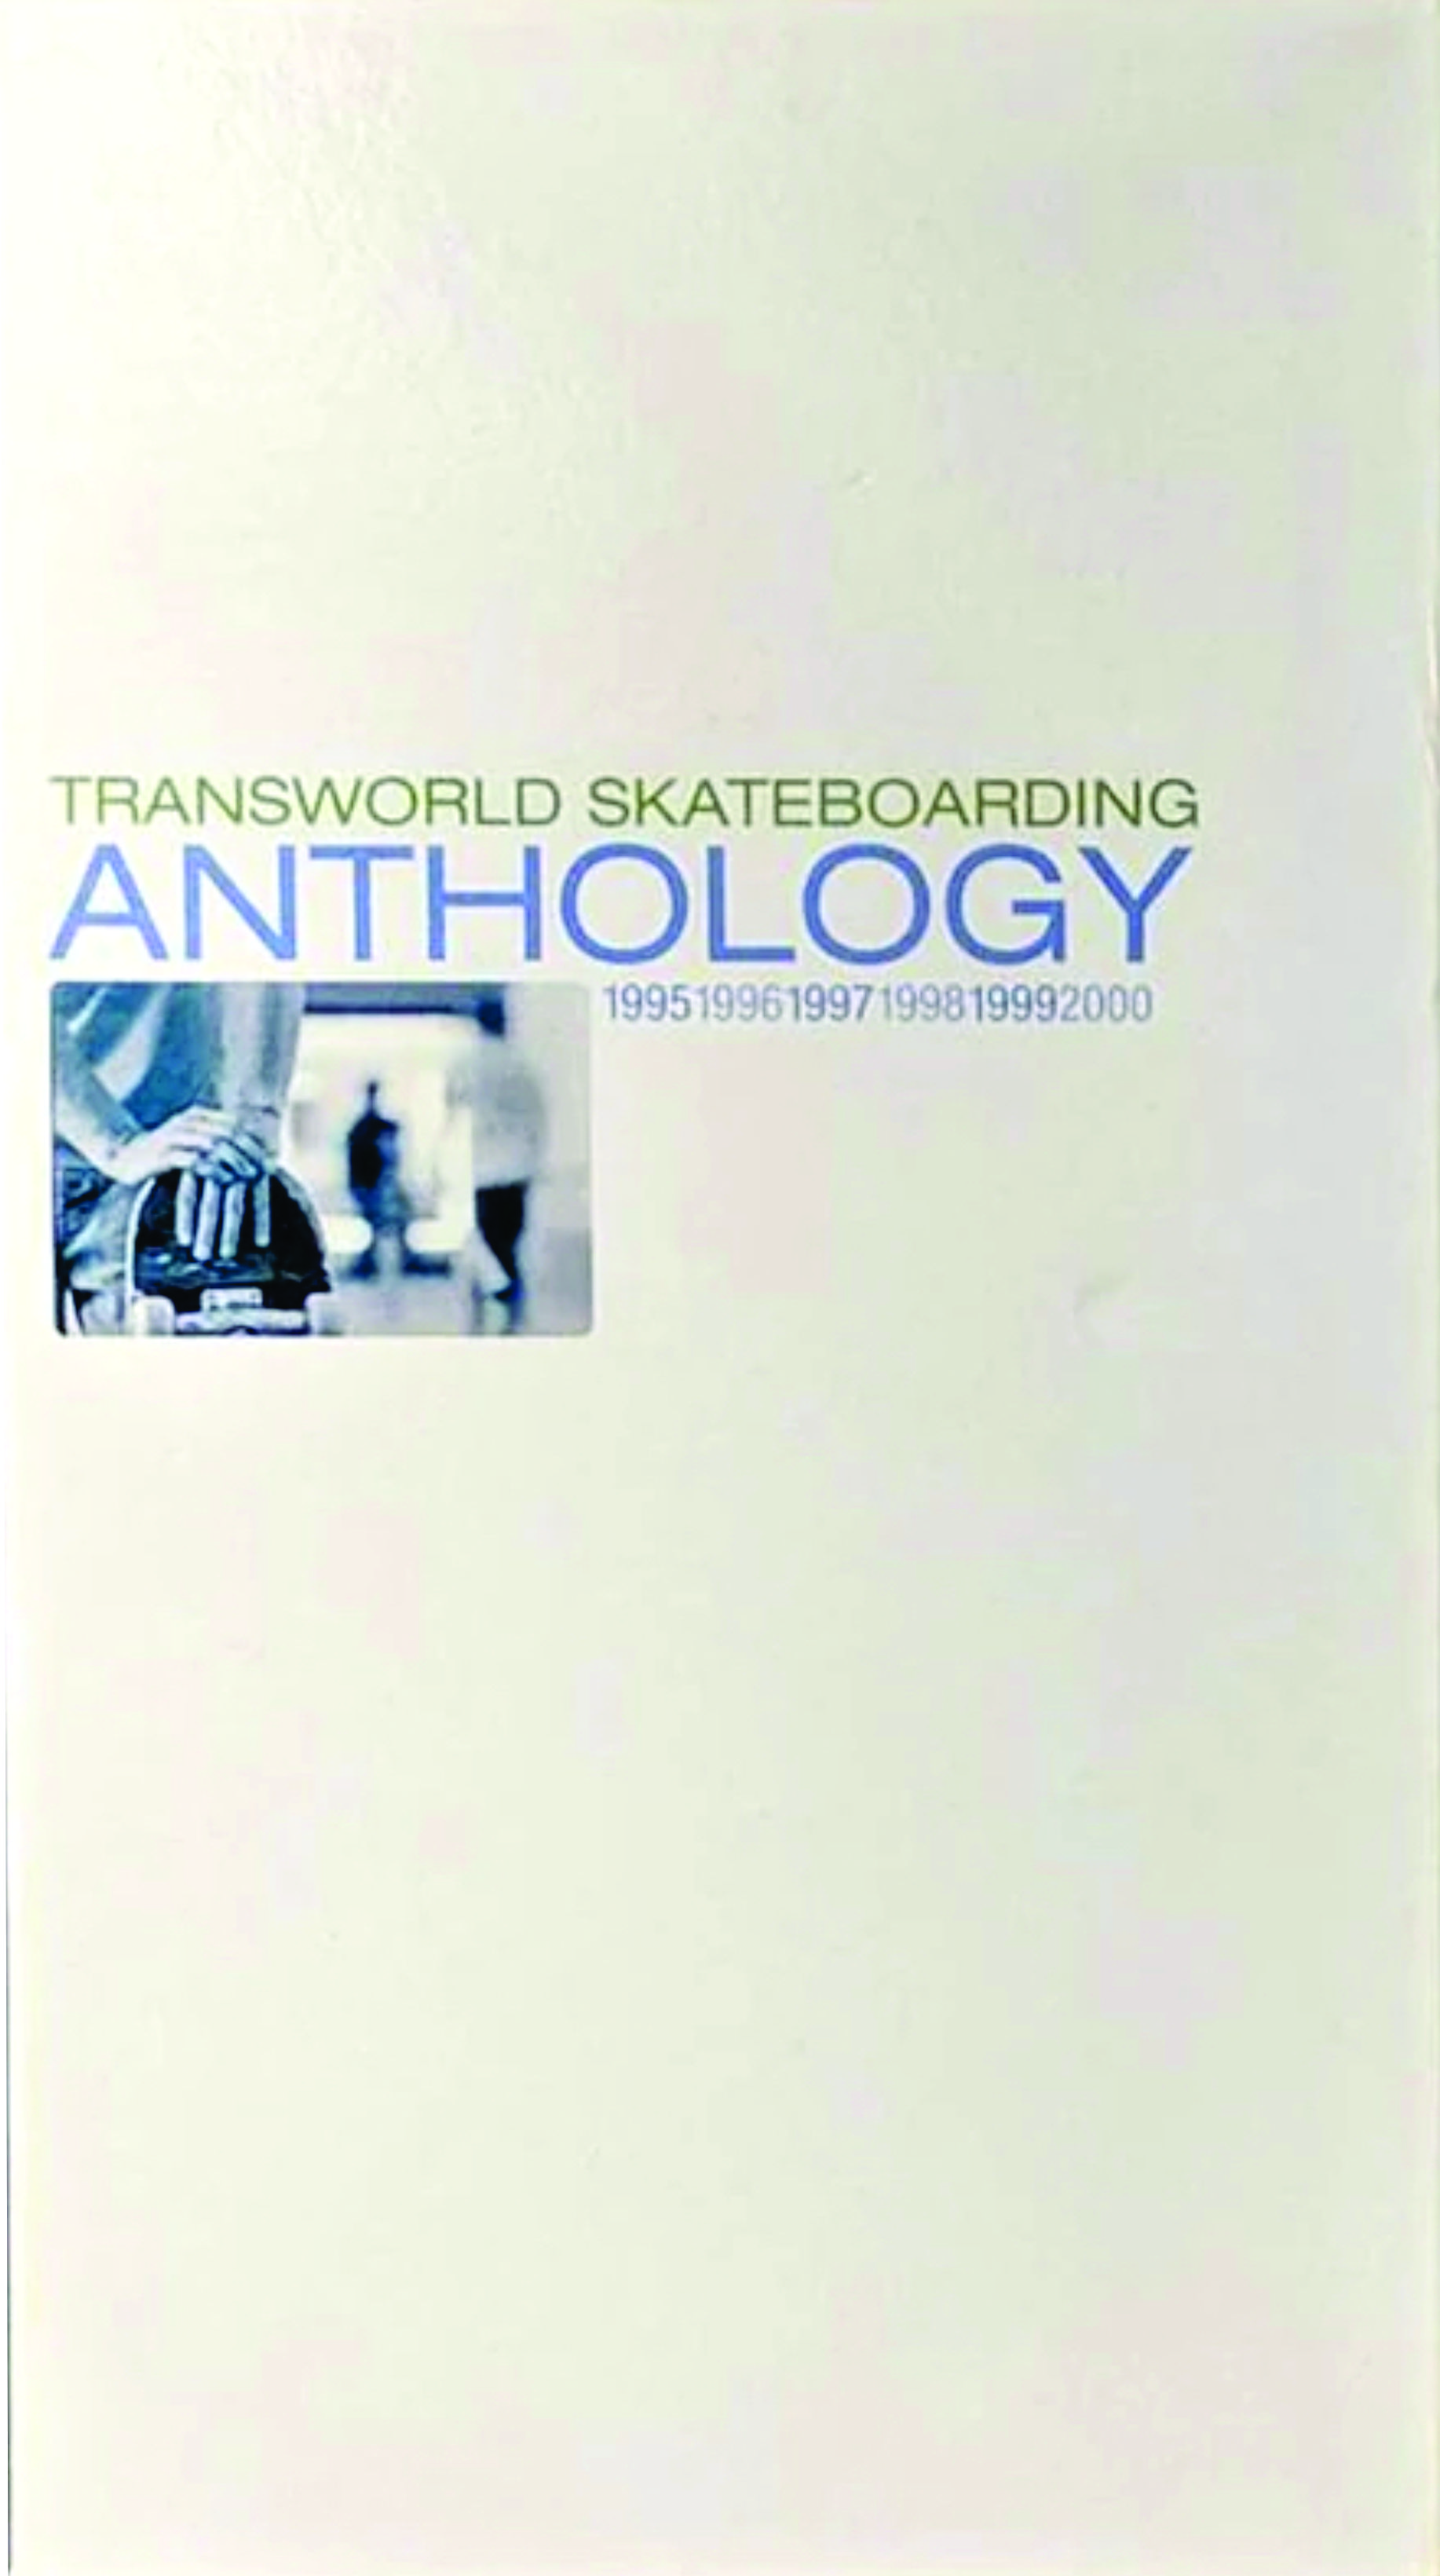 Transworld - Anthology cover art